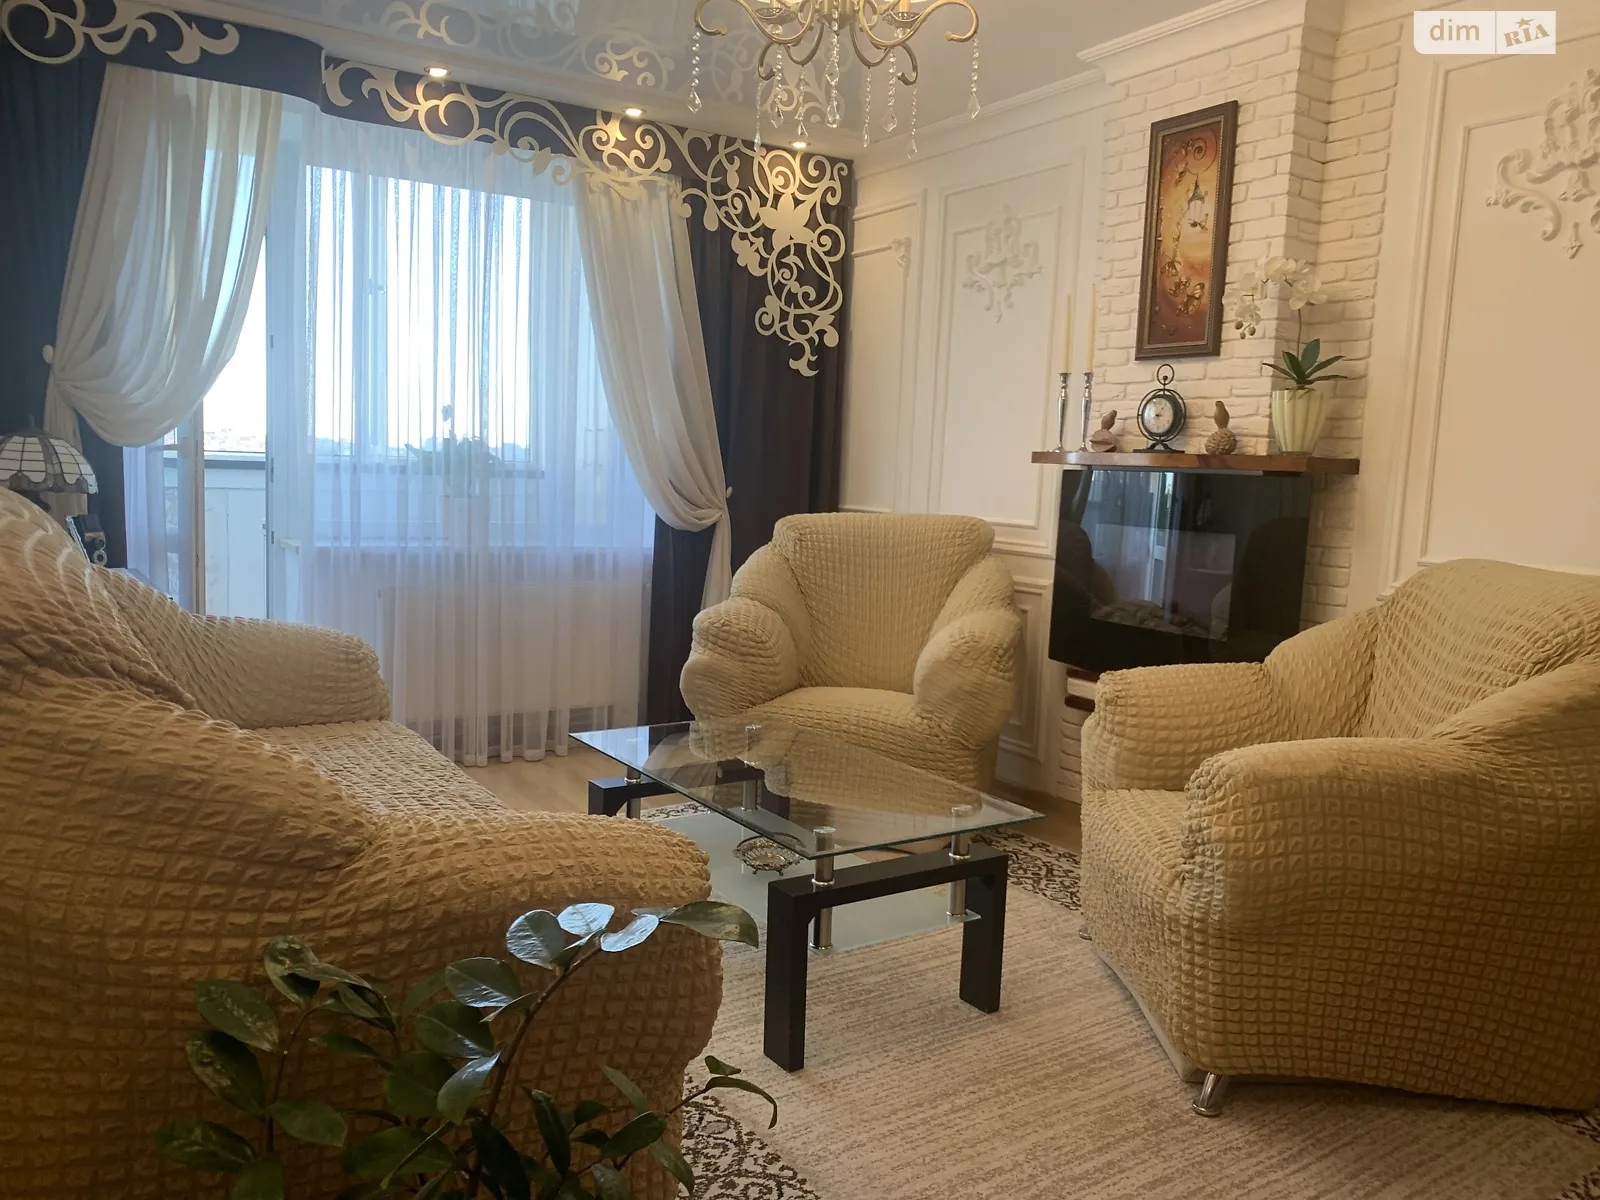 2-кімнатна квартира 49 кв. м у Тернополі, цена: 52000 $ - фото 1